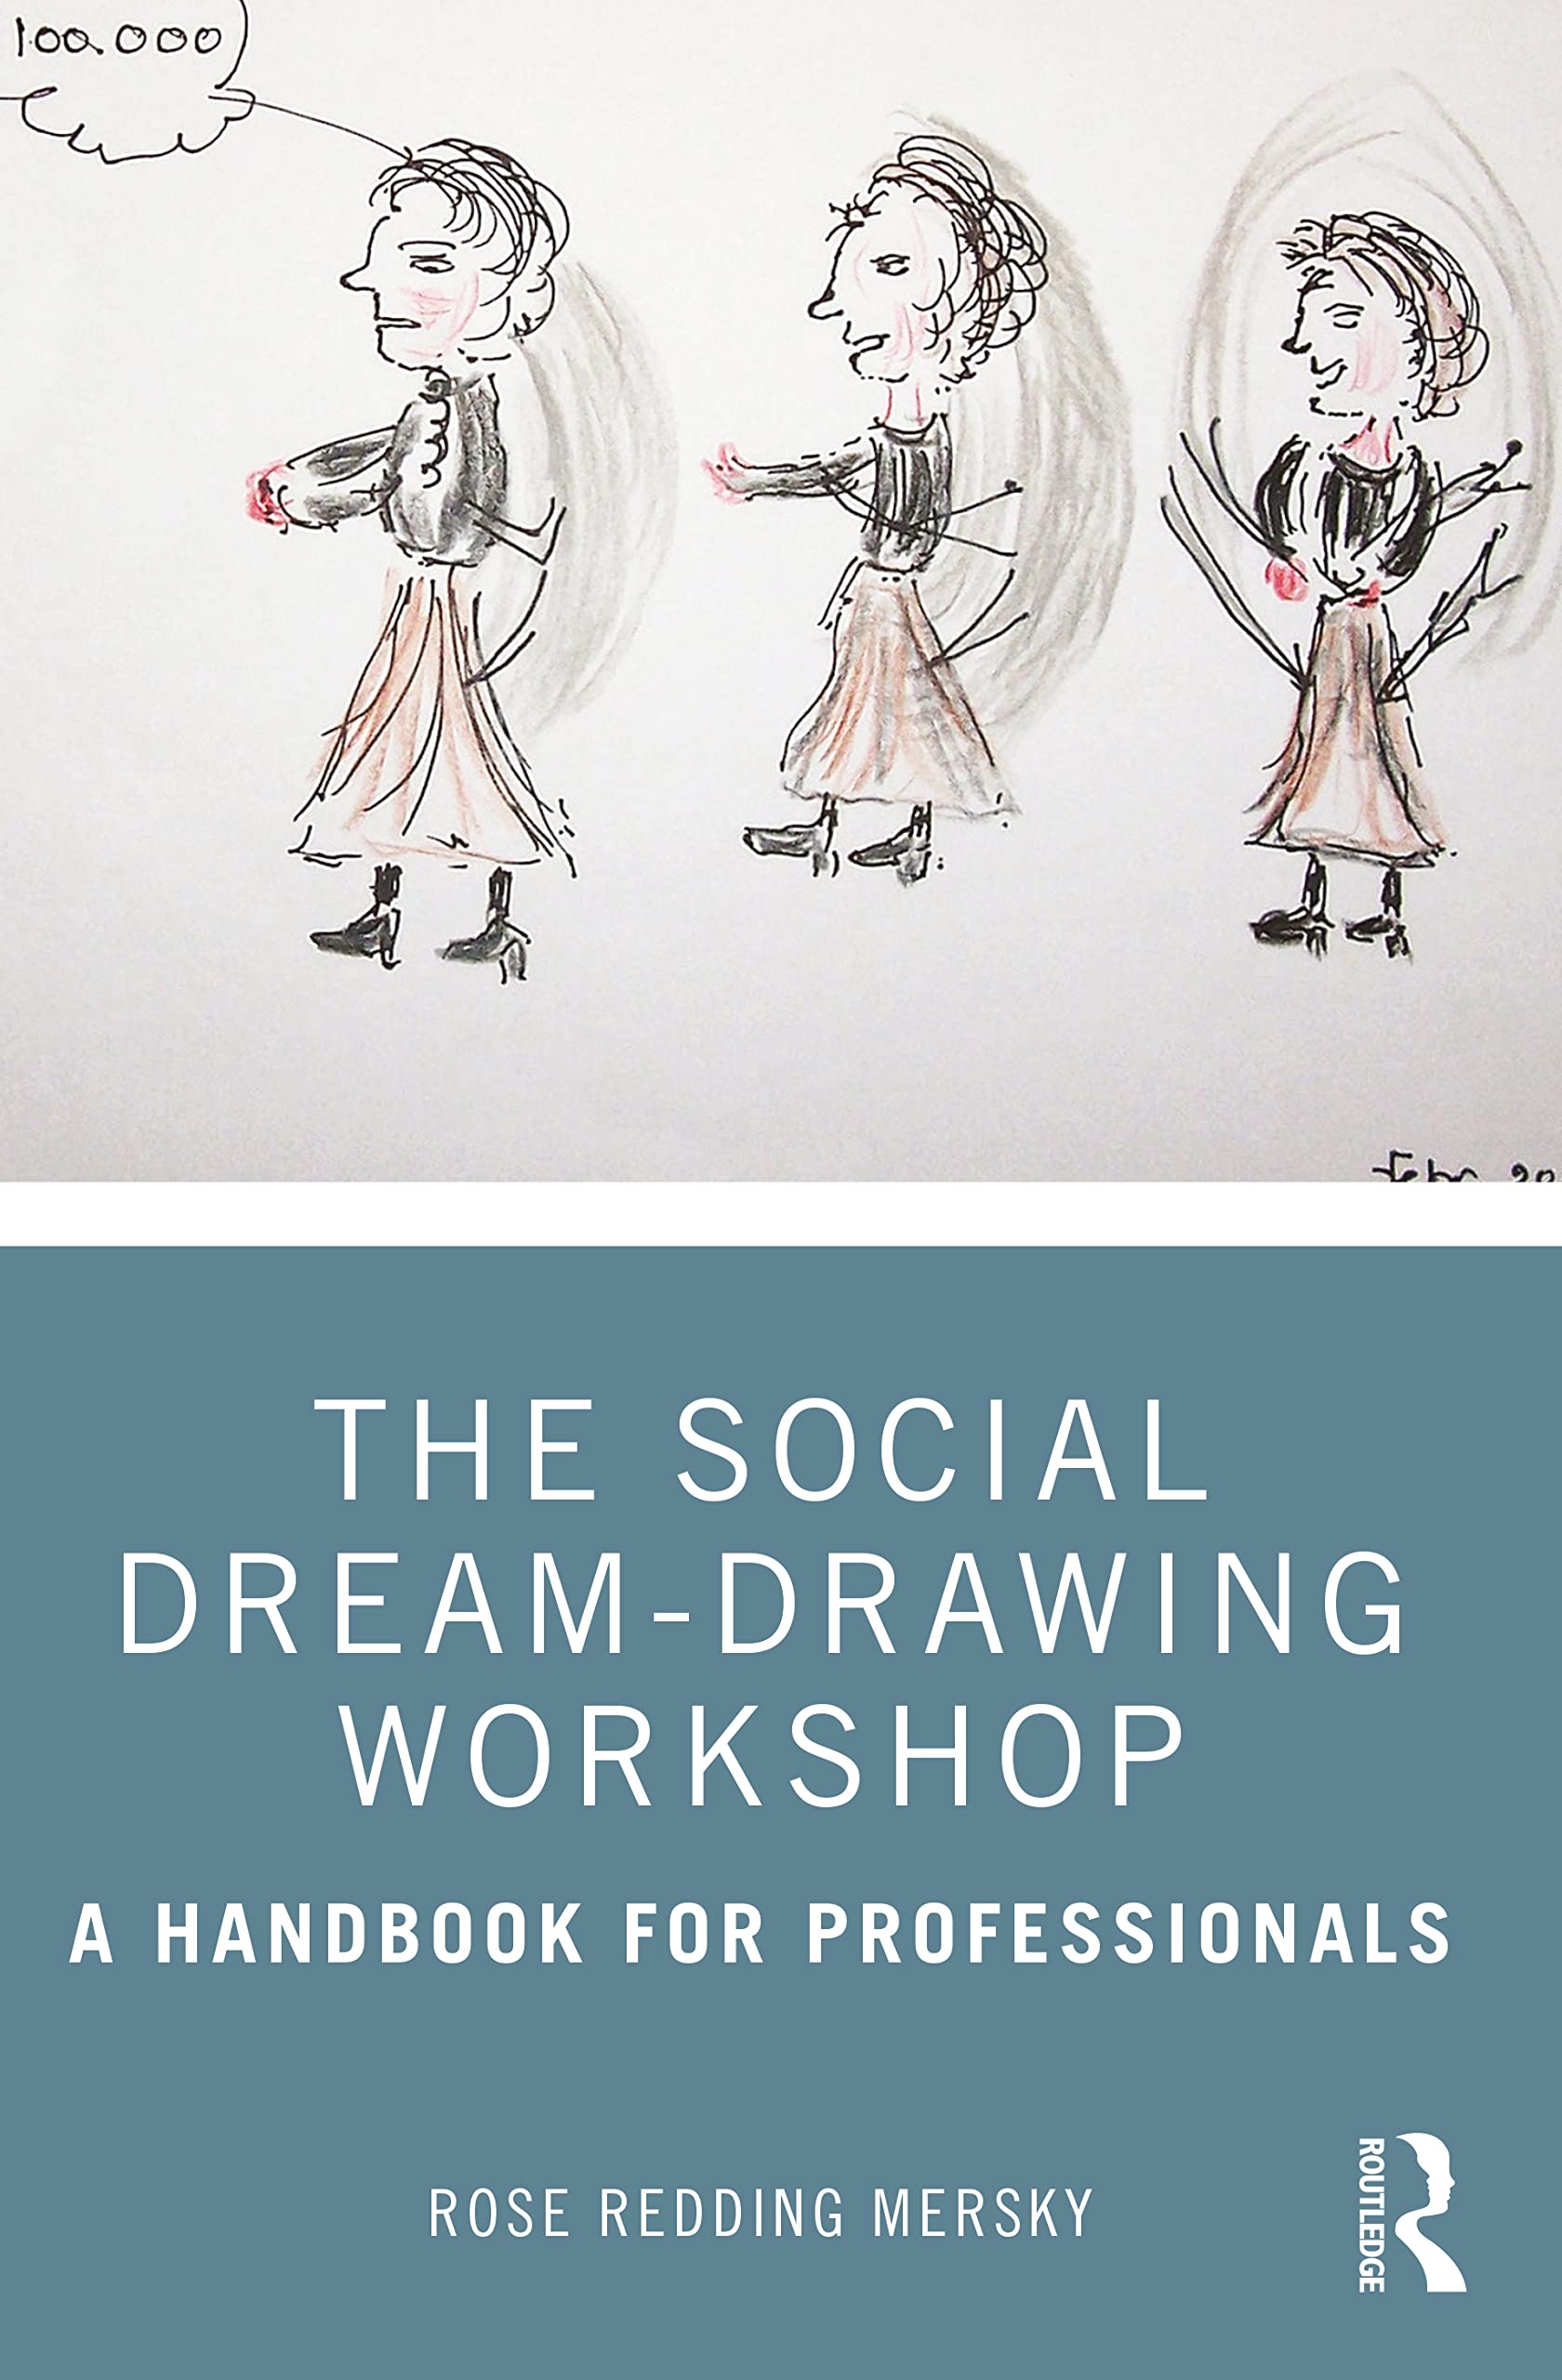 The Social Dream-Drawing Workshop by Rose Redding Mersky 